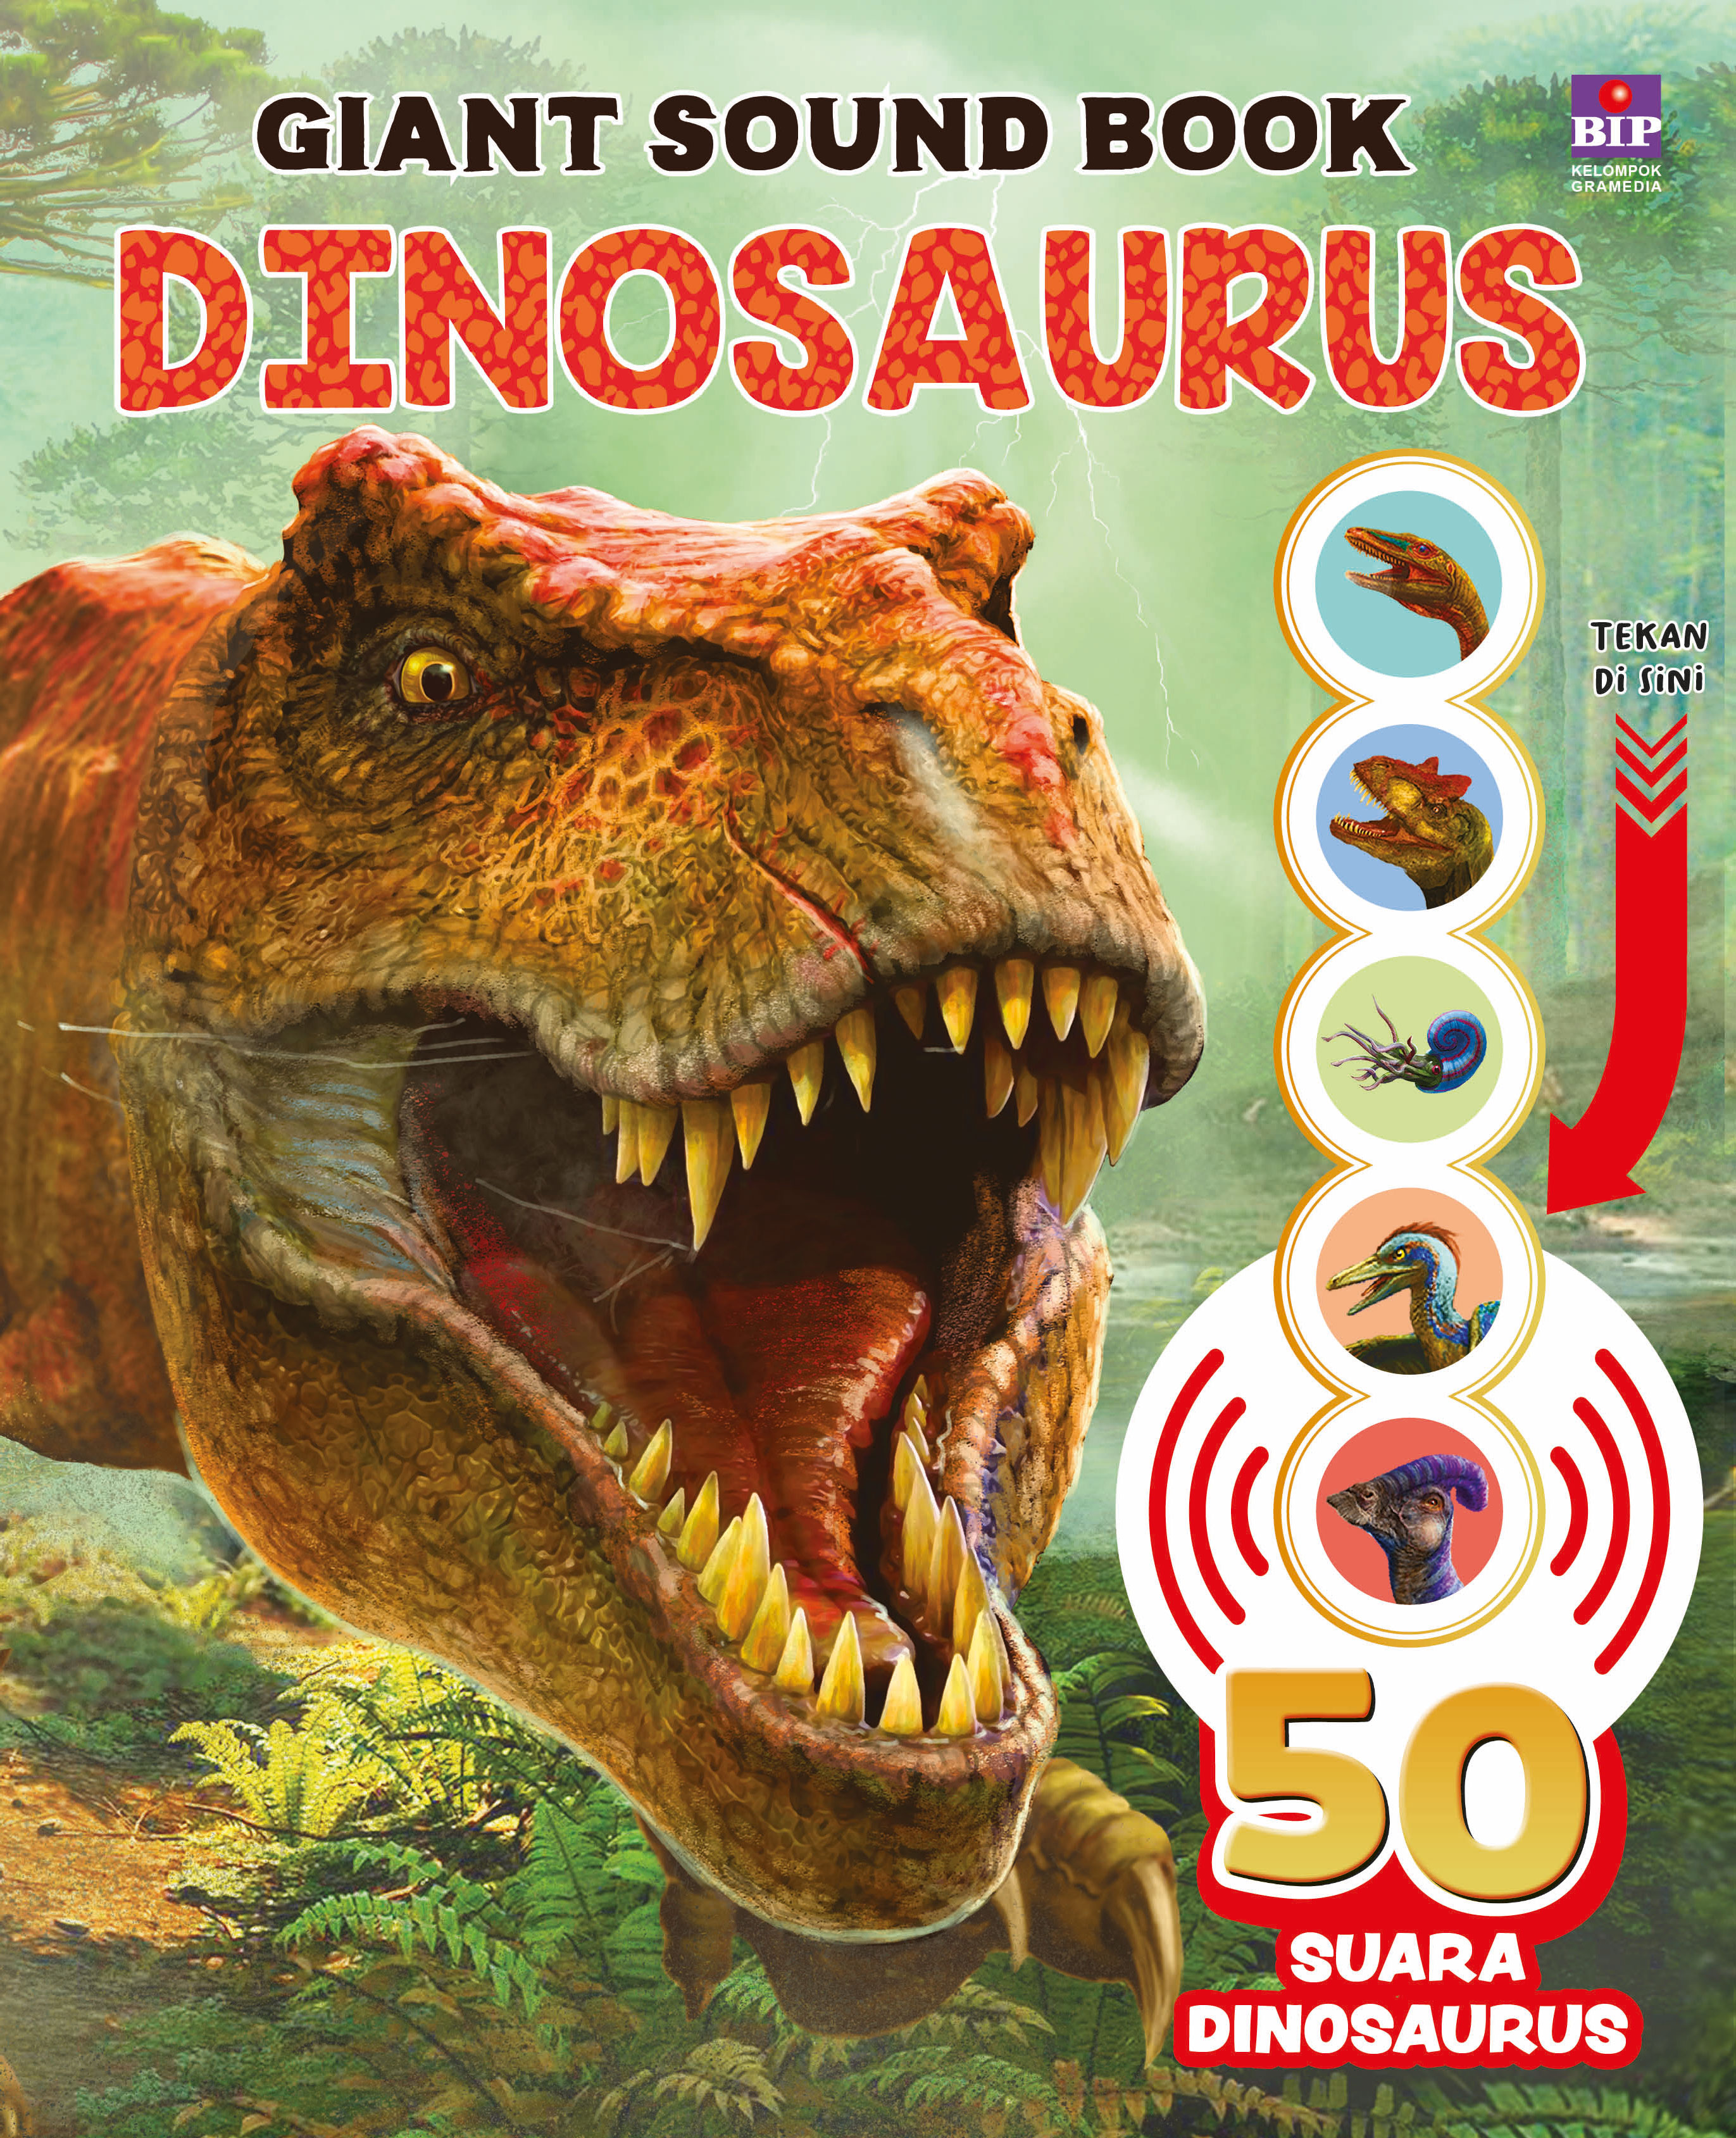 Giant Sound Book: Dinosaurus